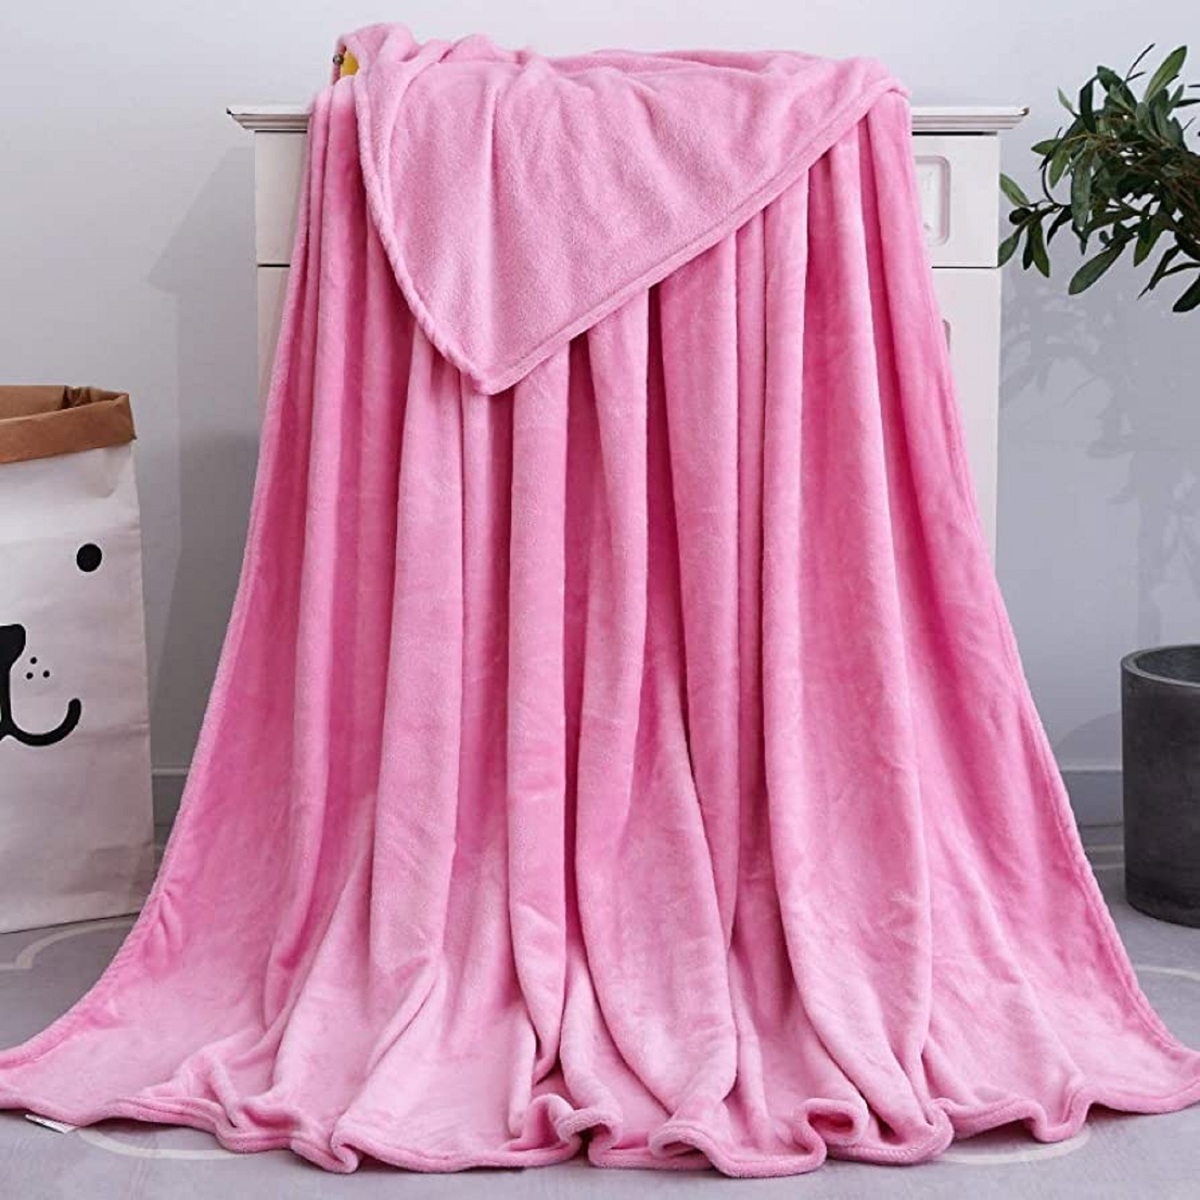 Maple Leaf Flannel Blanket 220x240cm Pink